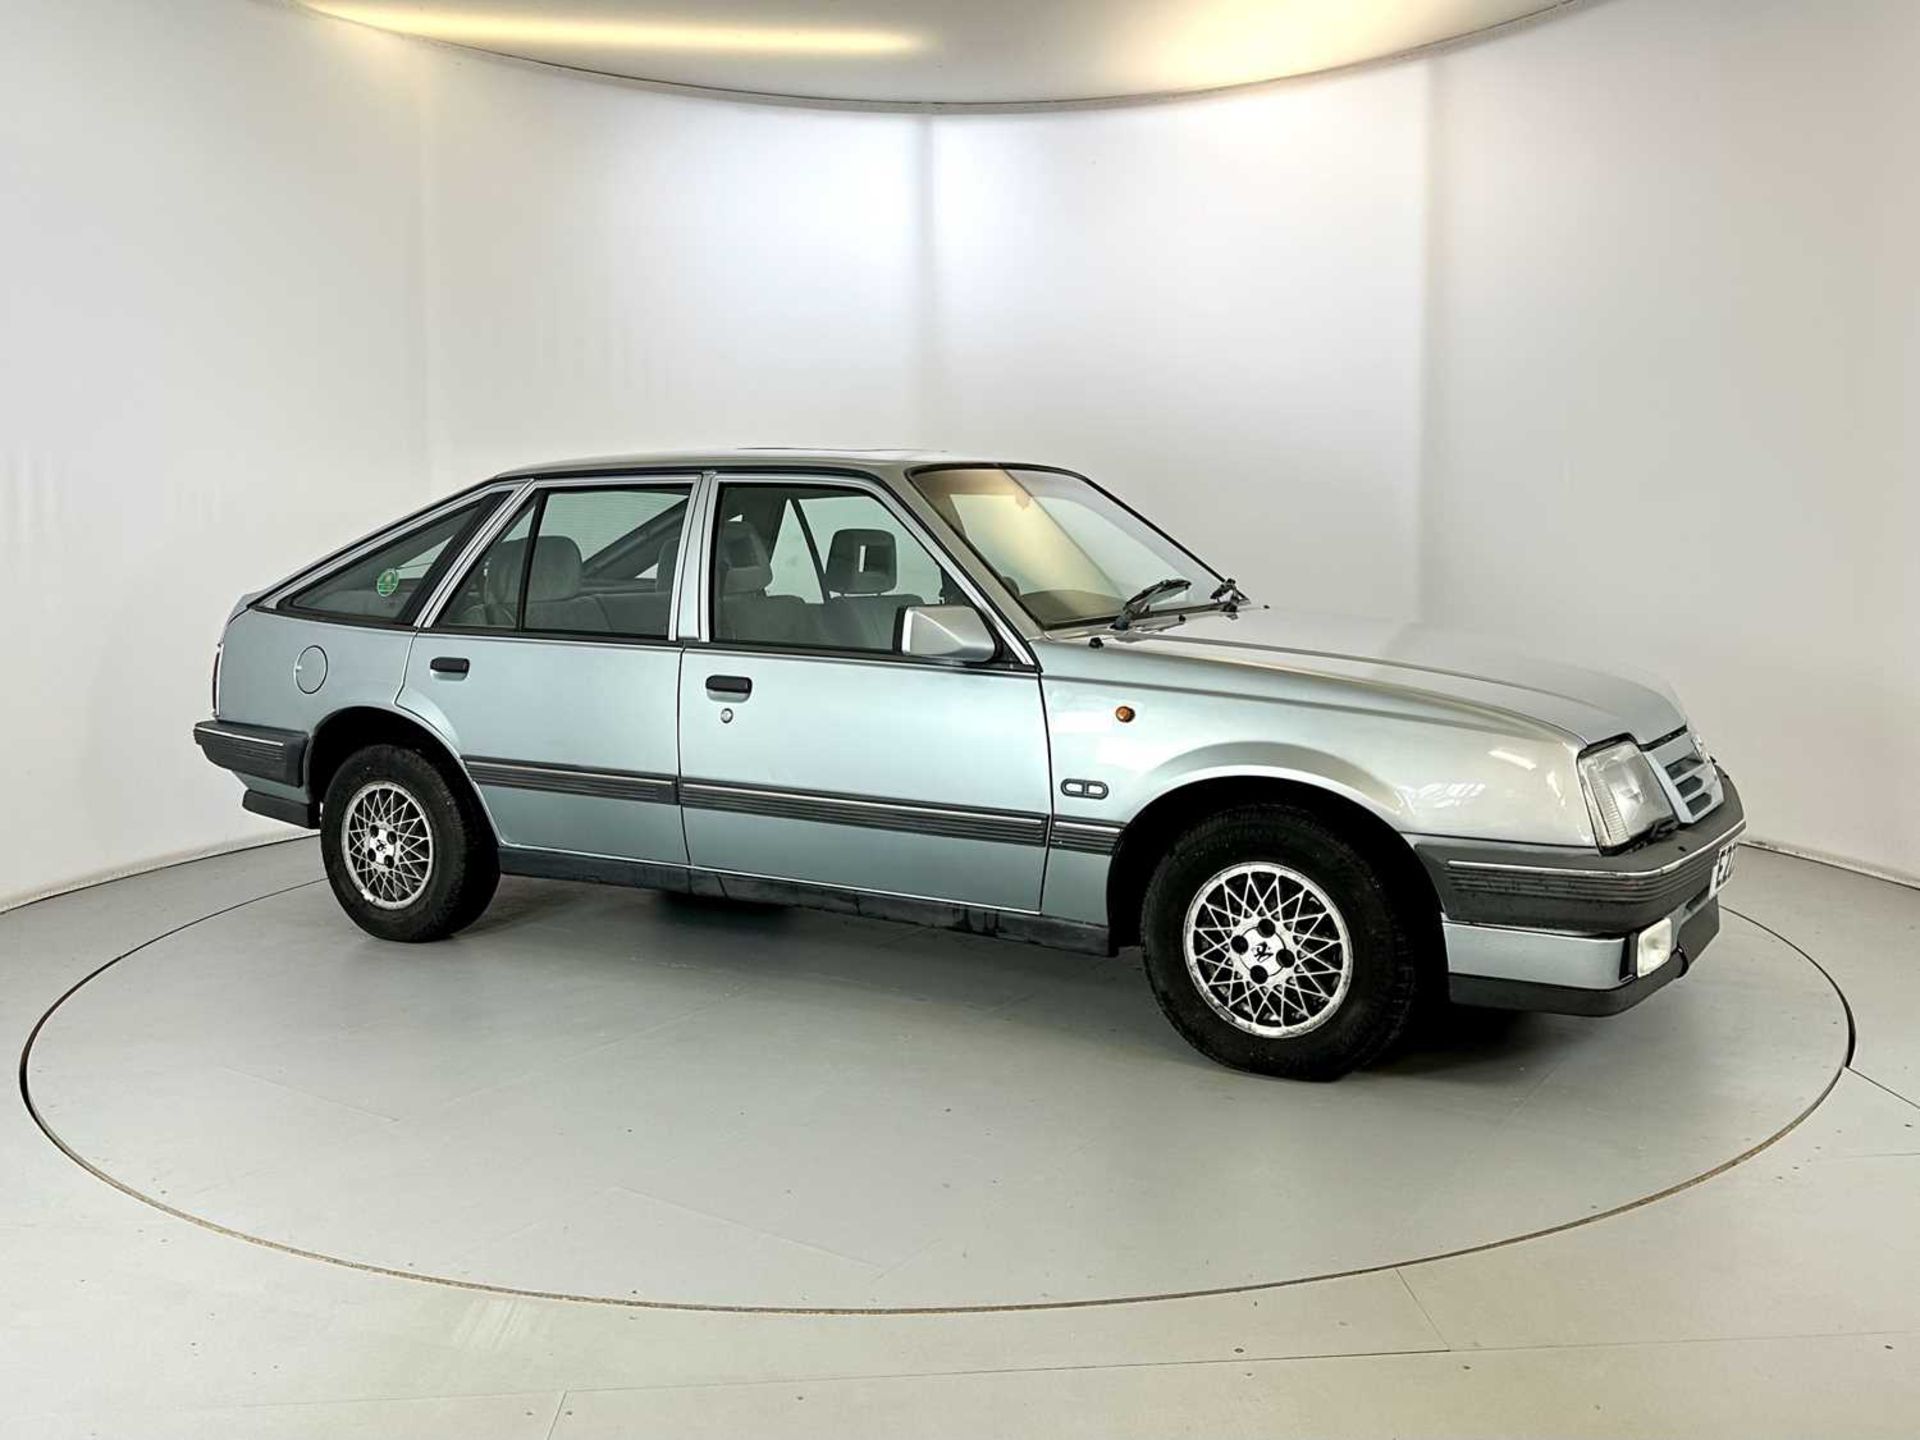 1988 Vauxhall Cavalier - Image 12 of 34